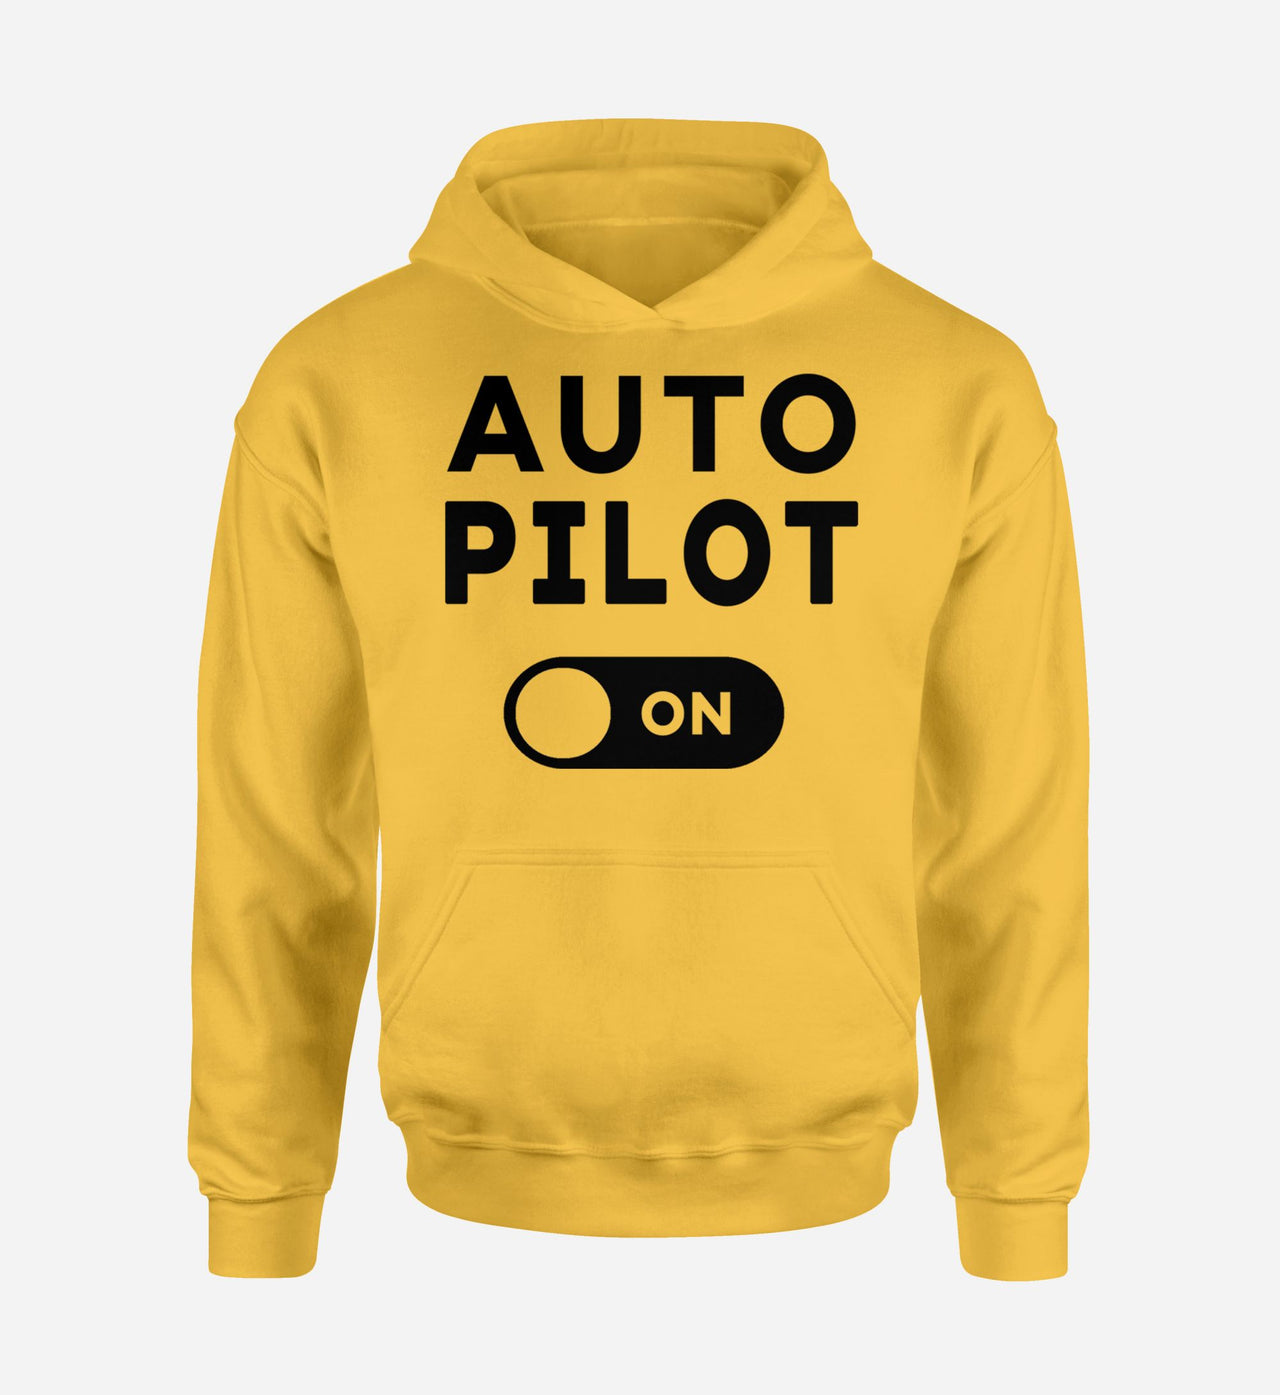 Auto Pilot ON Designed Hoodies